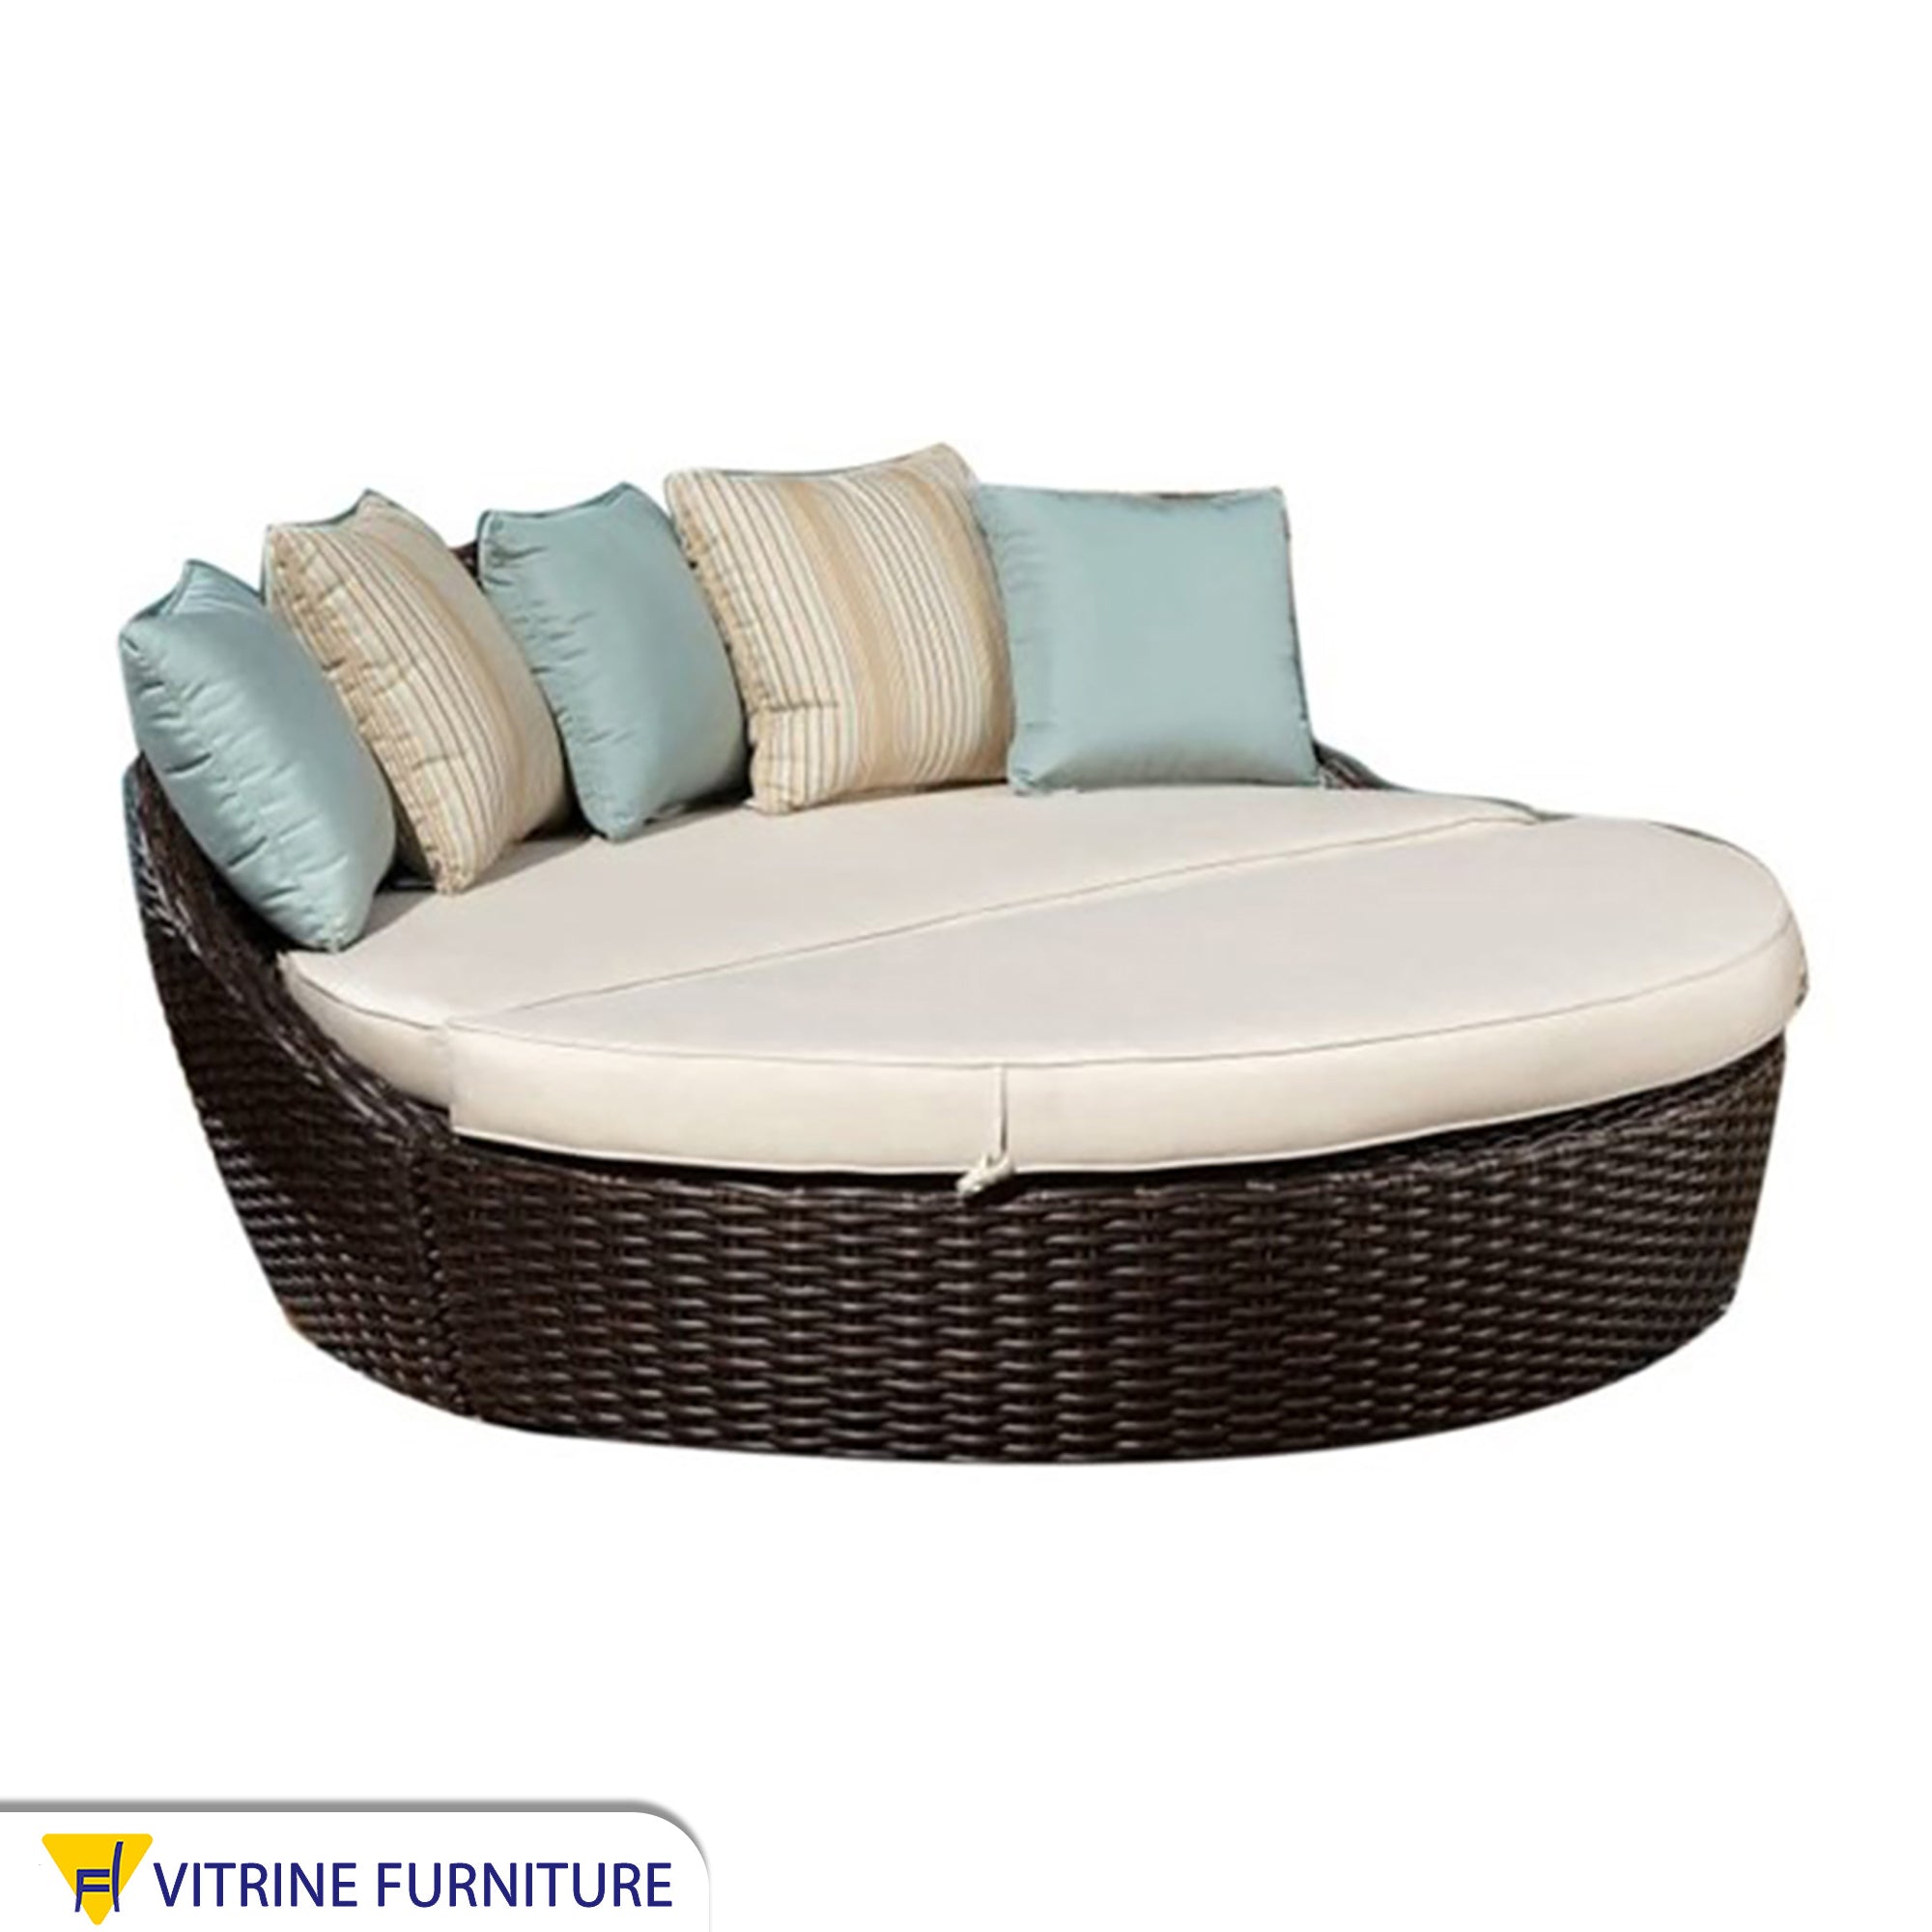 Round rattan bed with half backrest